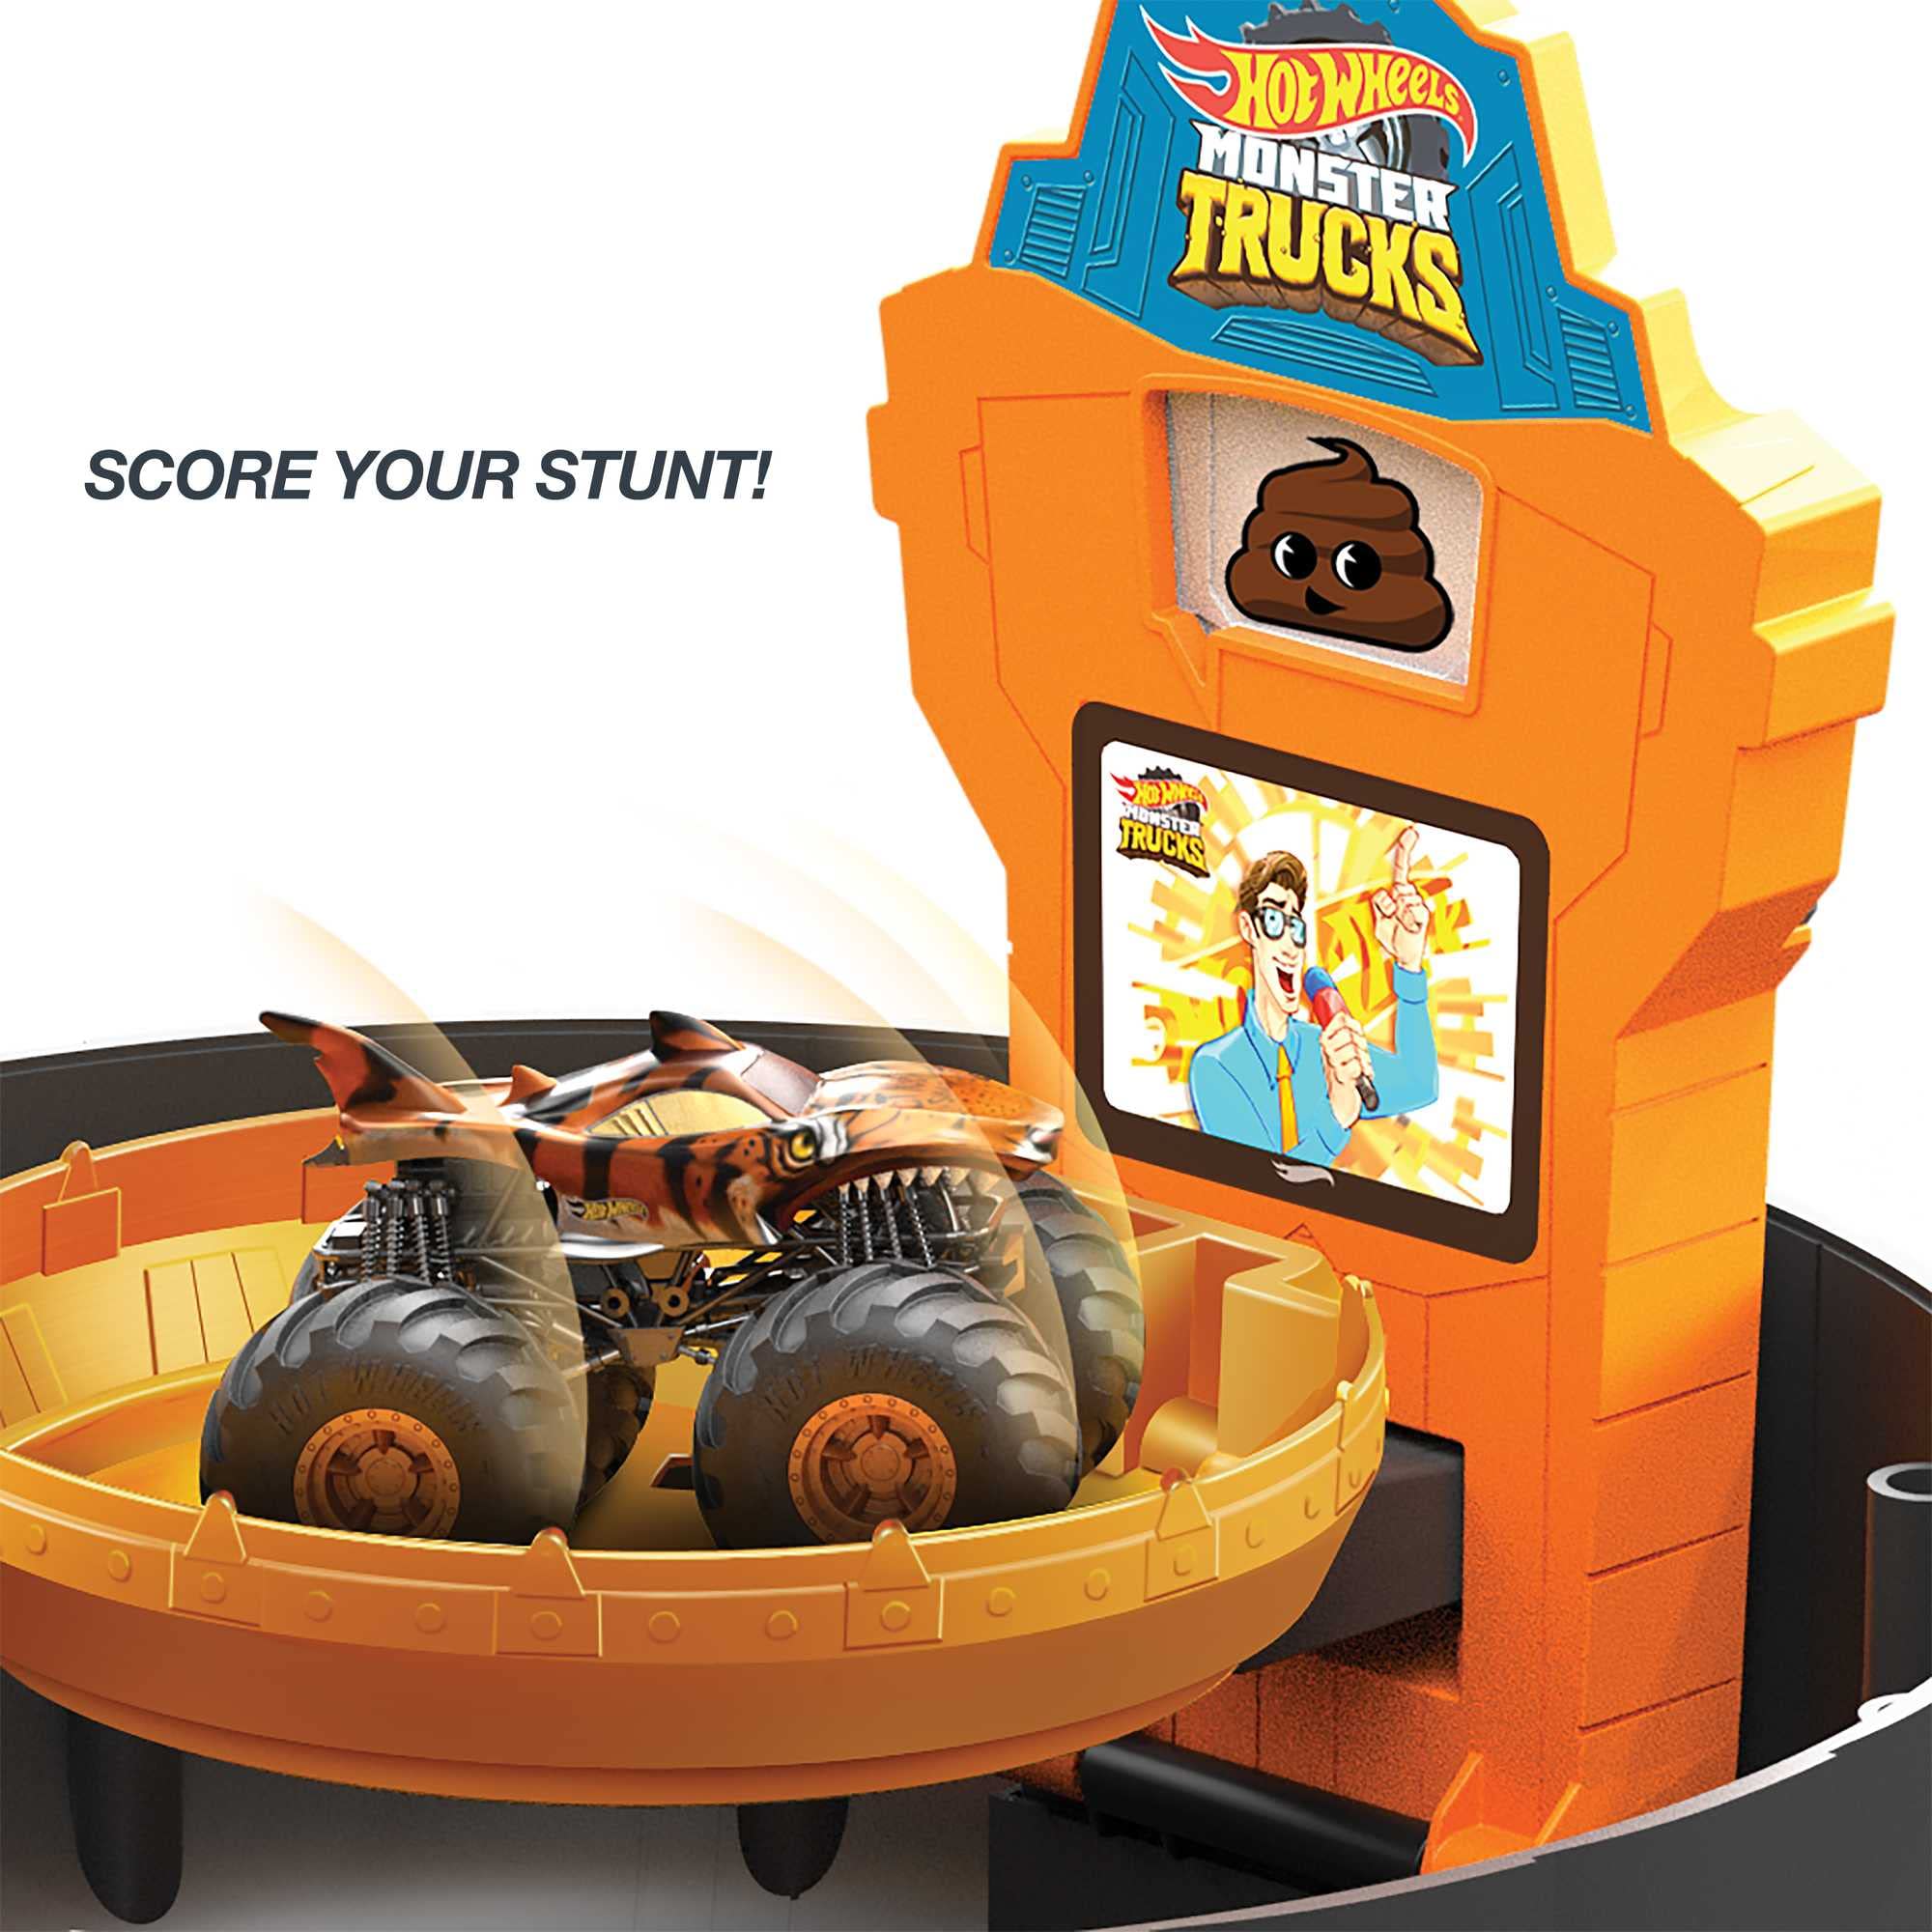 Hot Wheels Monster Trucks Stunt Tire Playset With 3 Toy Monster Trucks & 4 Hot Wheels Toy Cars in 1:64 Scale [Amazon Exclusive]